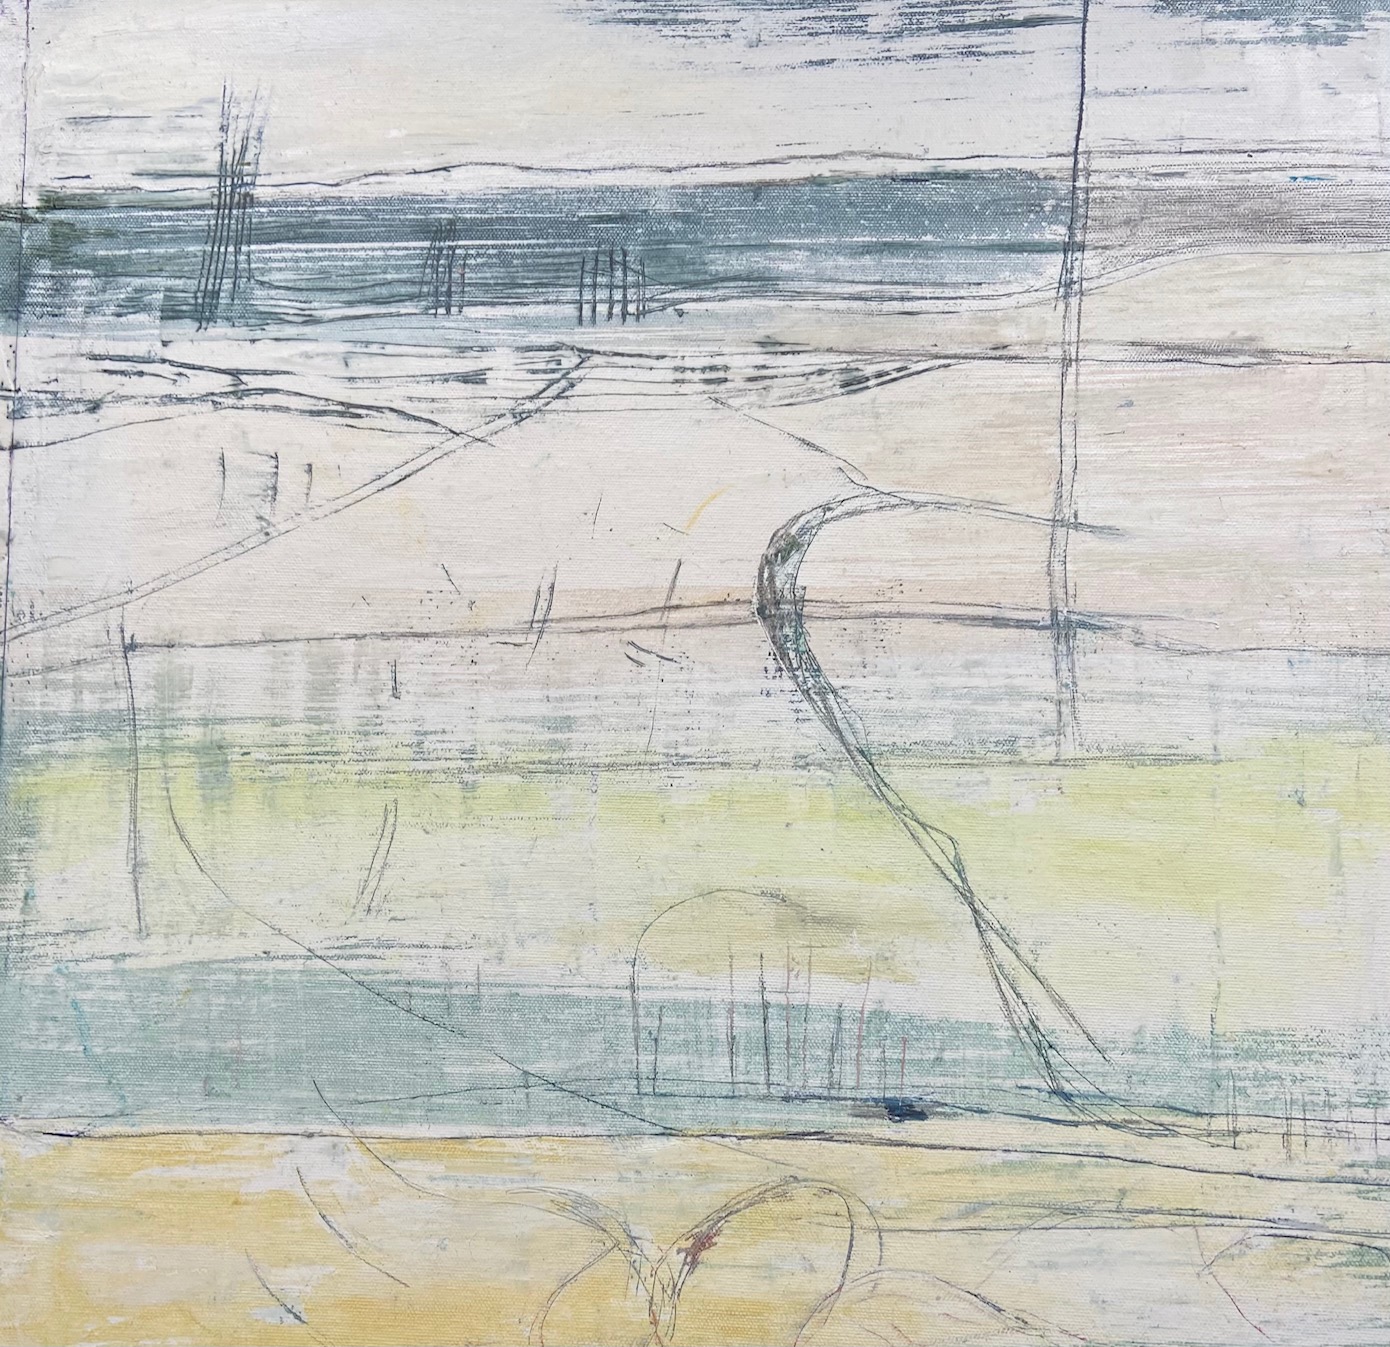 The Valley  by Jill dunkerton  | Lethbridge Landscape Prize 2021 Finalists | Lethbridge Gallery